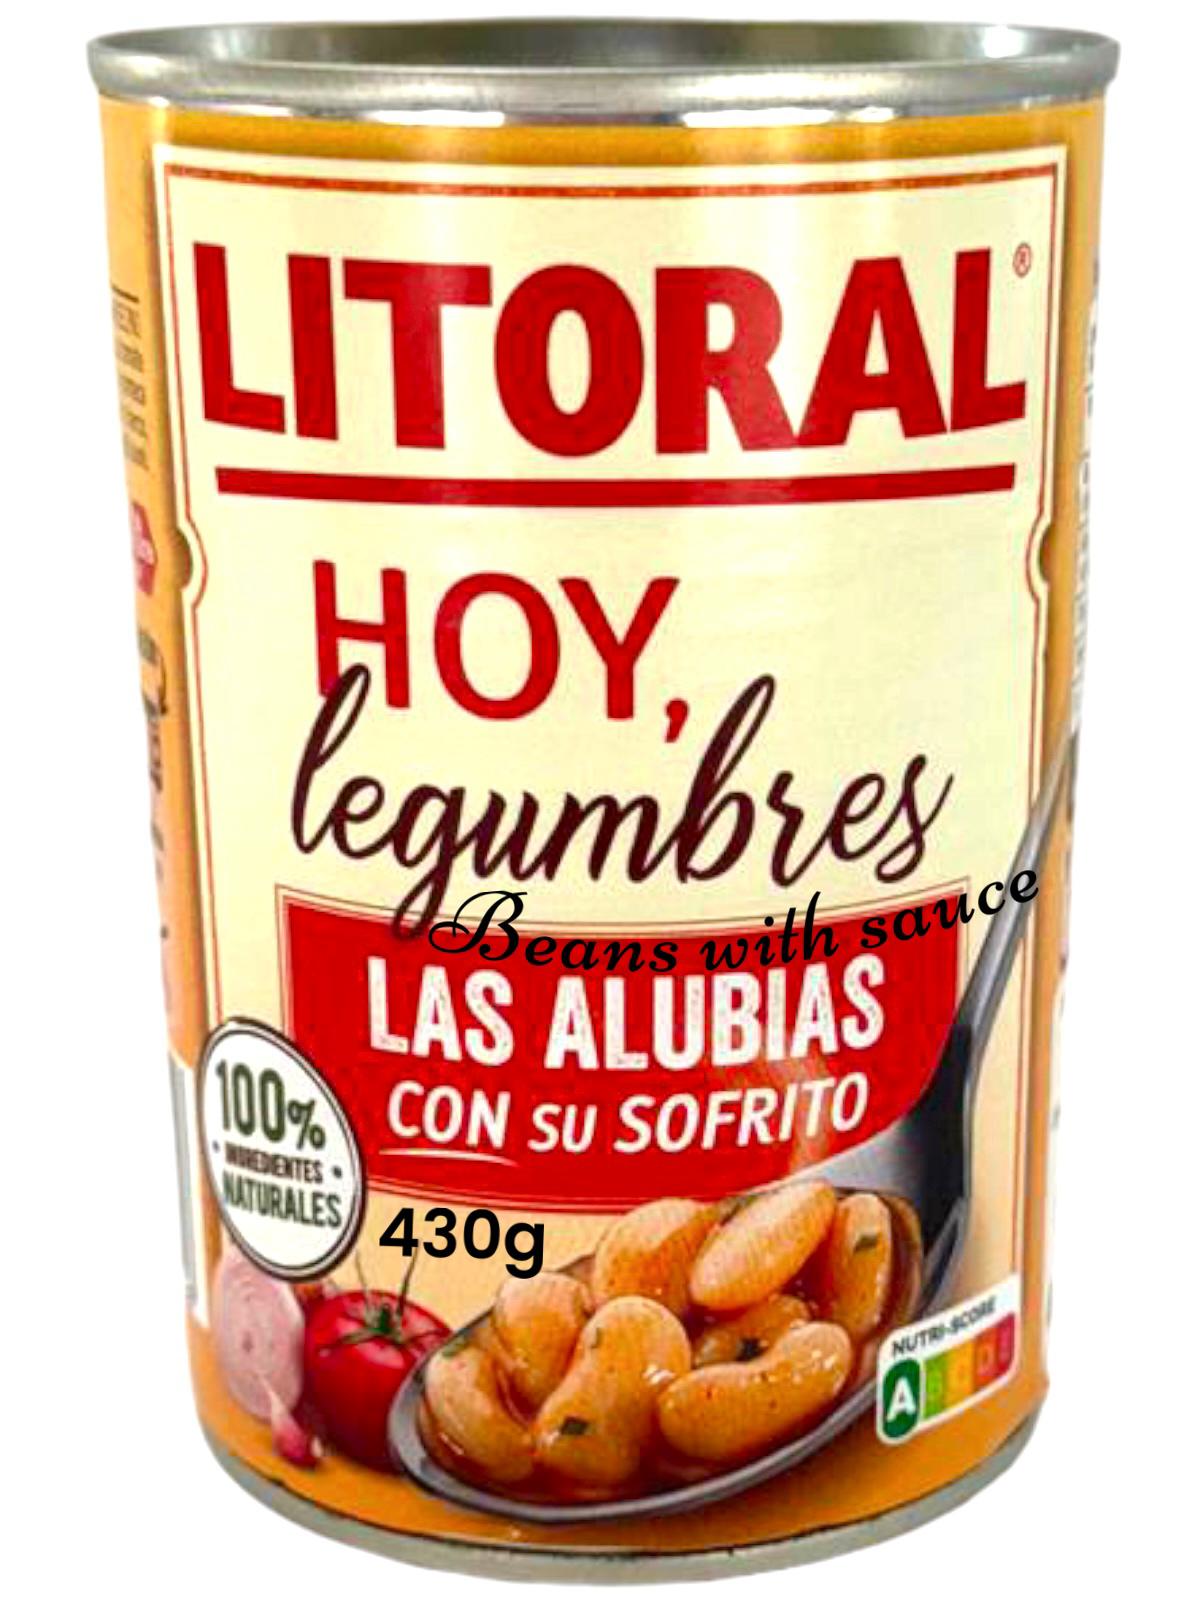 Litoral Legumbres Alubias con Su Sofrito Beans 430g